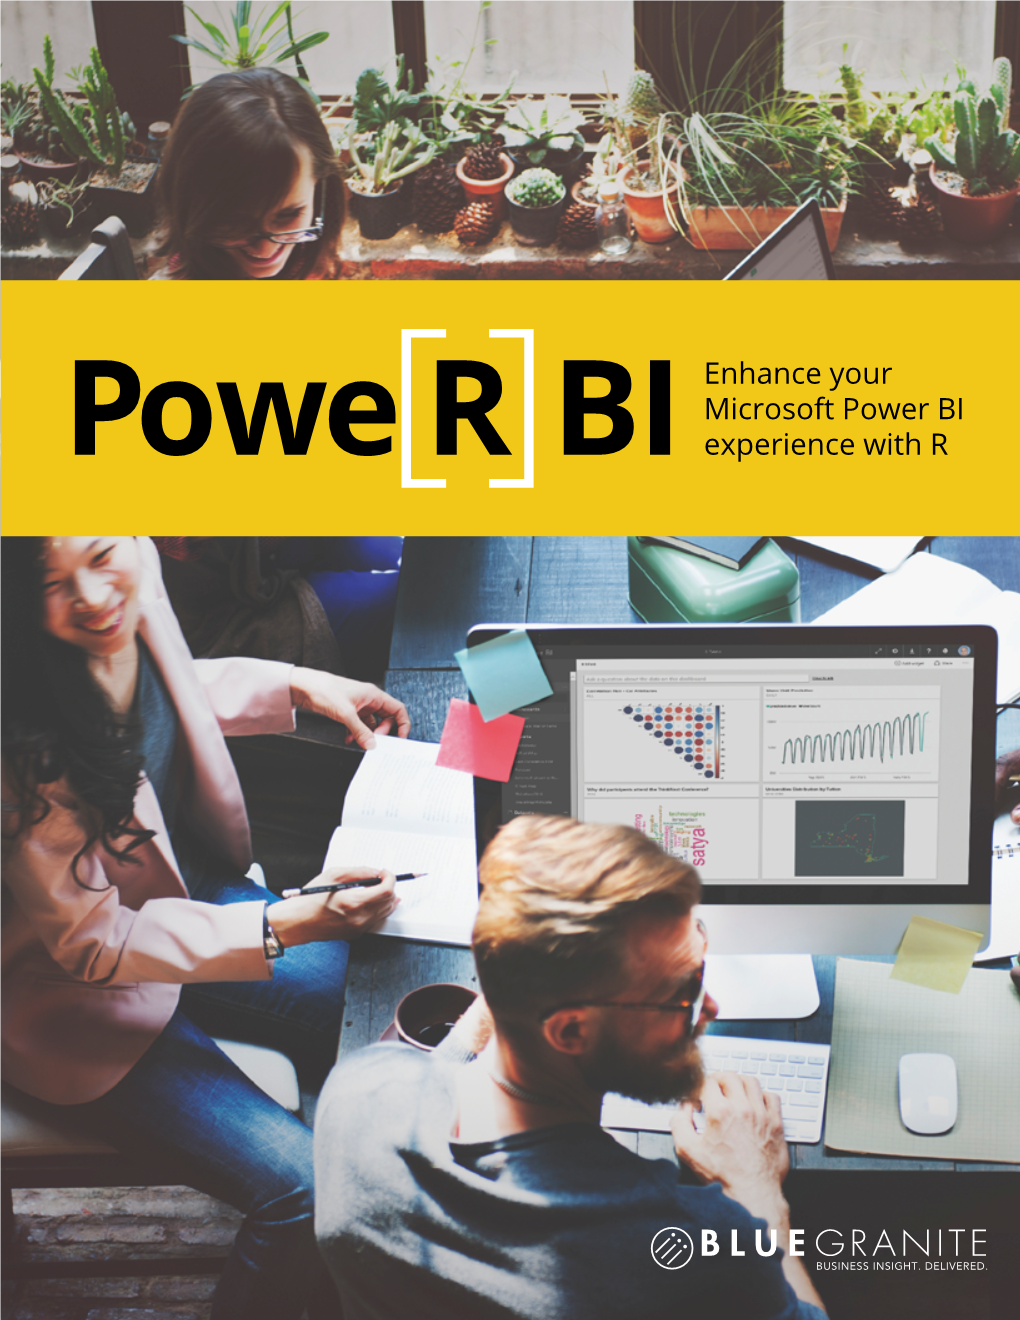 Powe R Bienhance Your Microsoft Power BI Experience with R